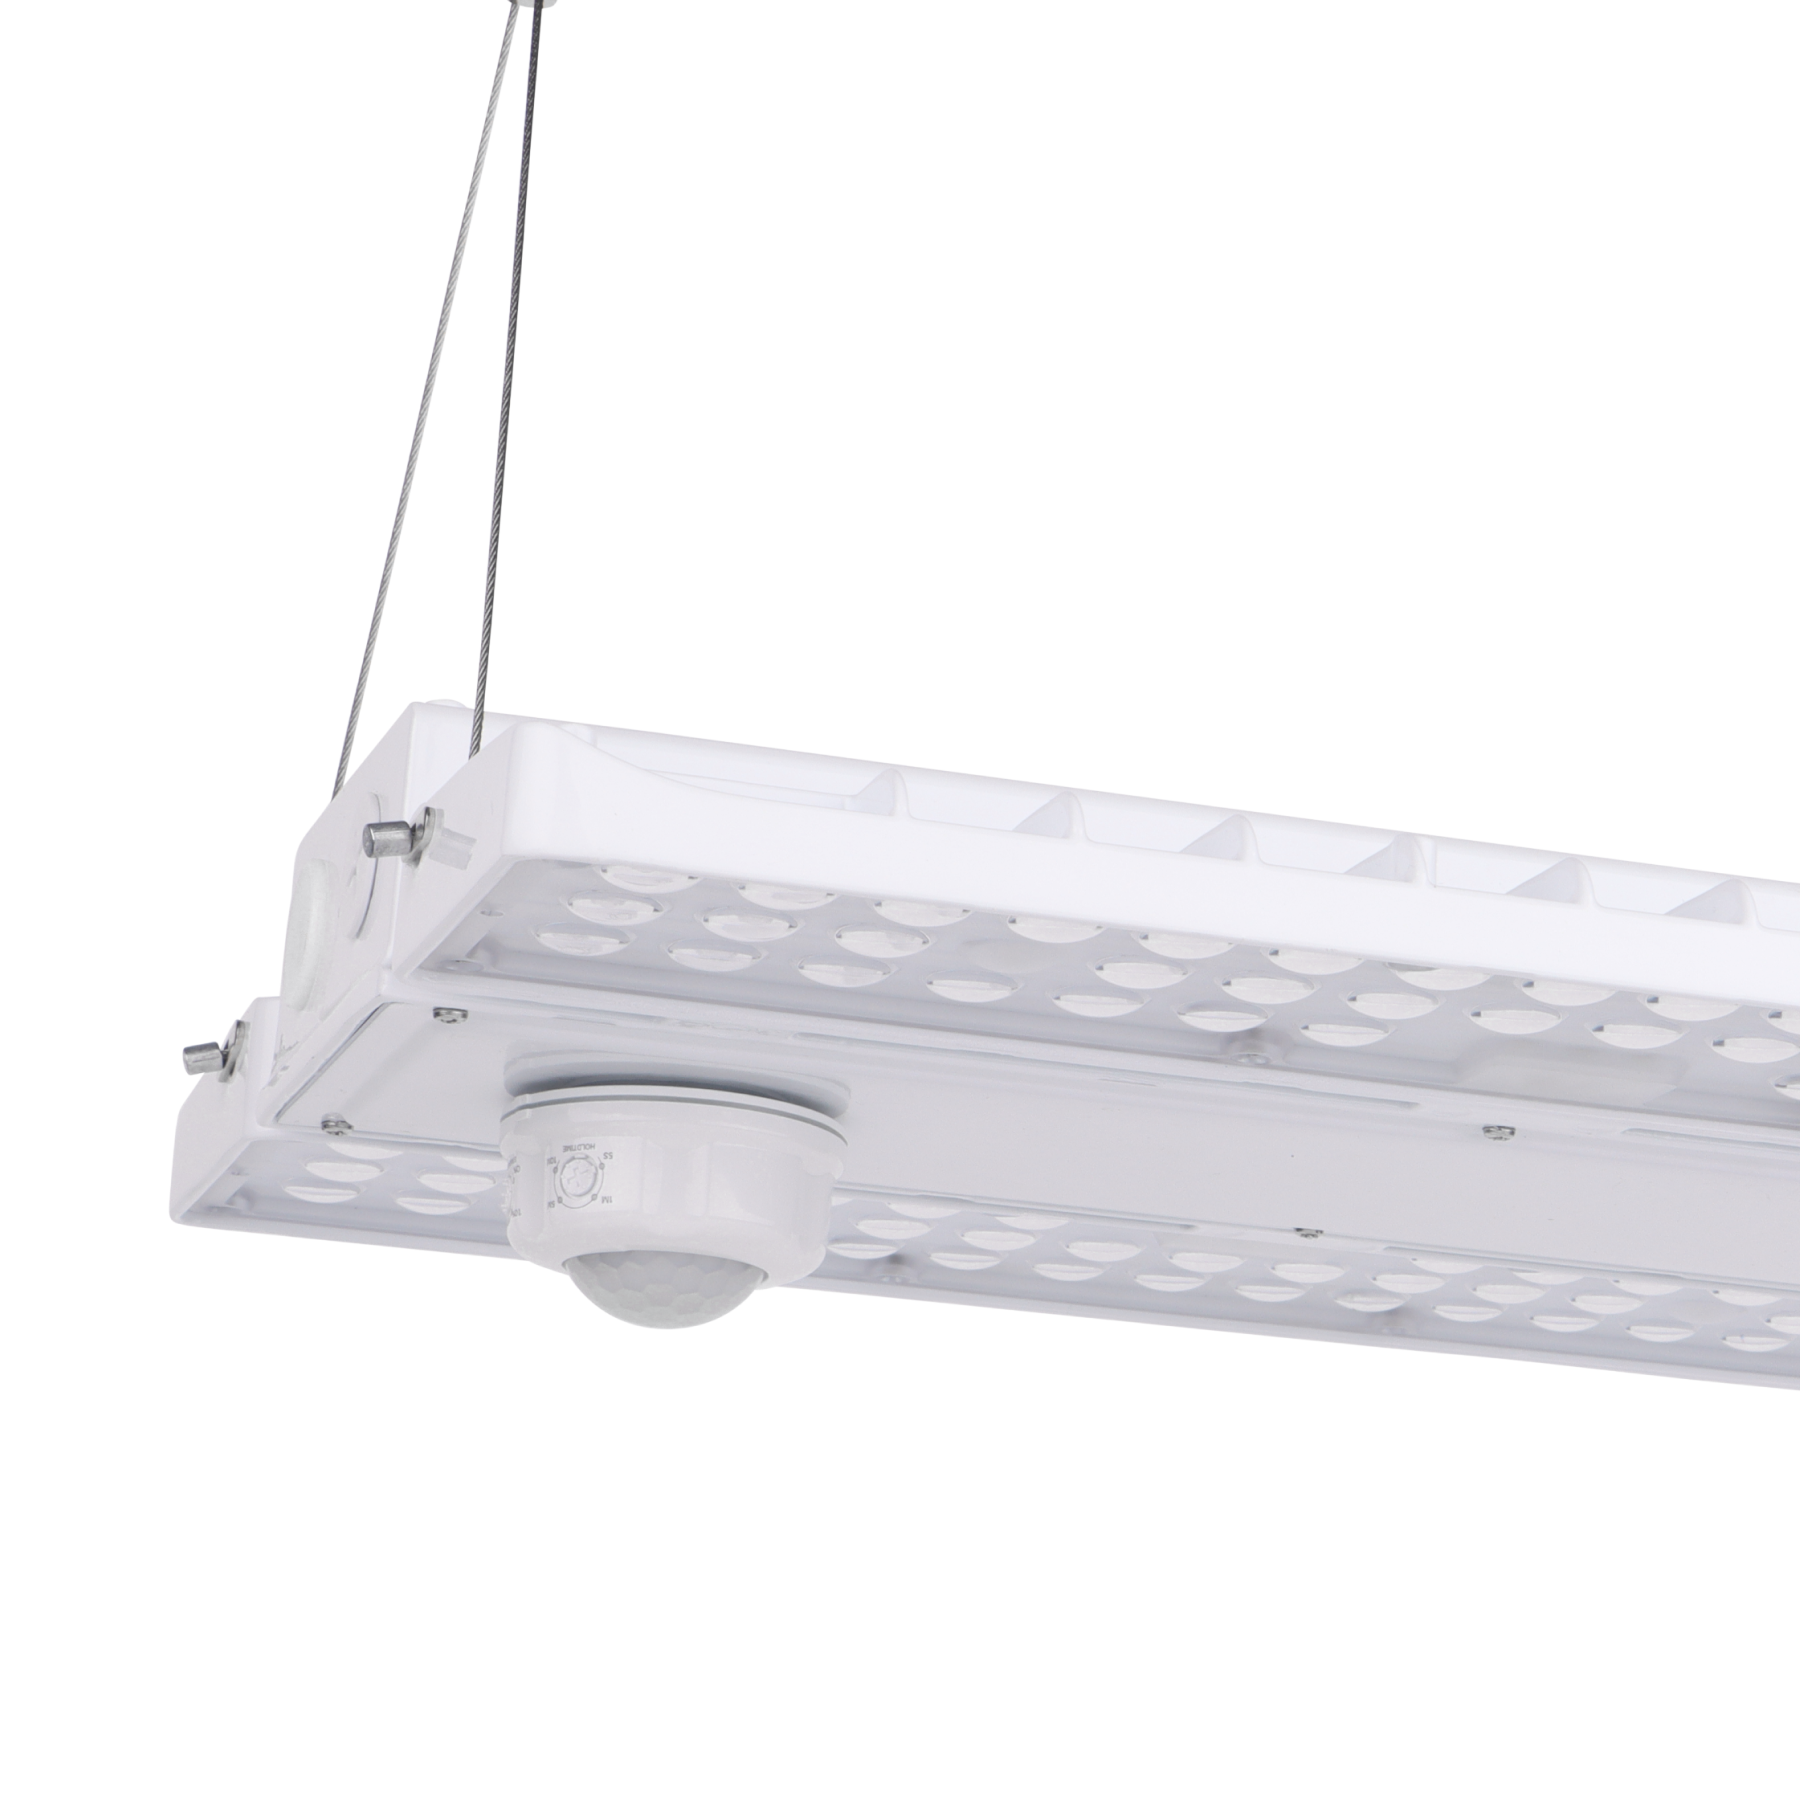 1.2FT LED Linear High Bay Light 90/105/130W Wattage Adjustable - 4000/5000K - 20150Lumens 0-10V Dimmable With sensor base, 120-277VAC Input Voltage - DLC 5.1 Premium, White